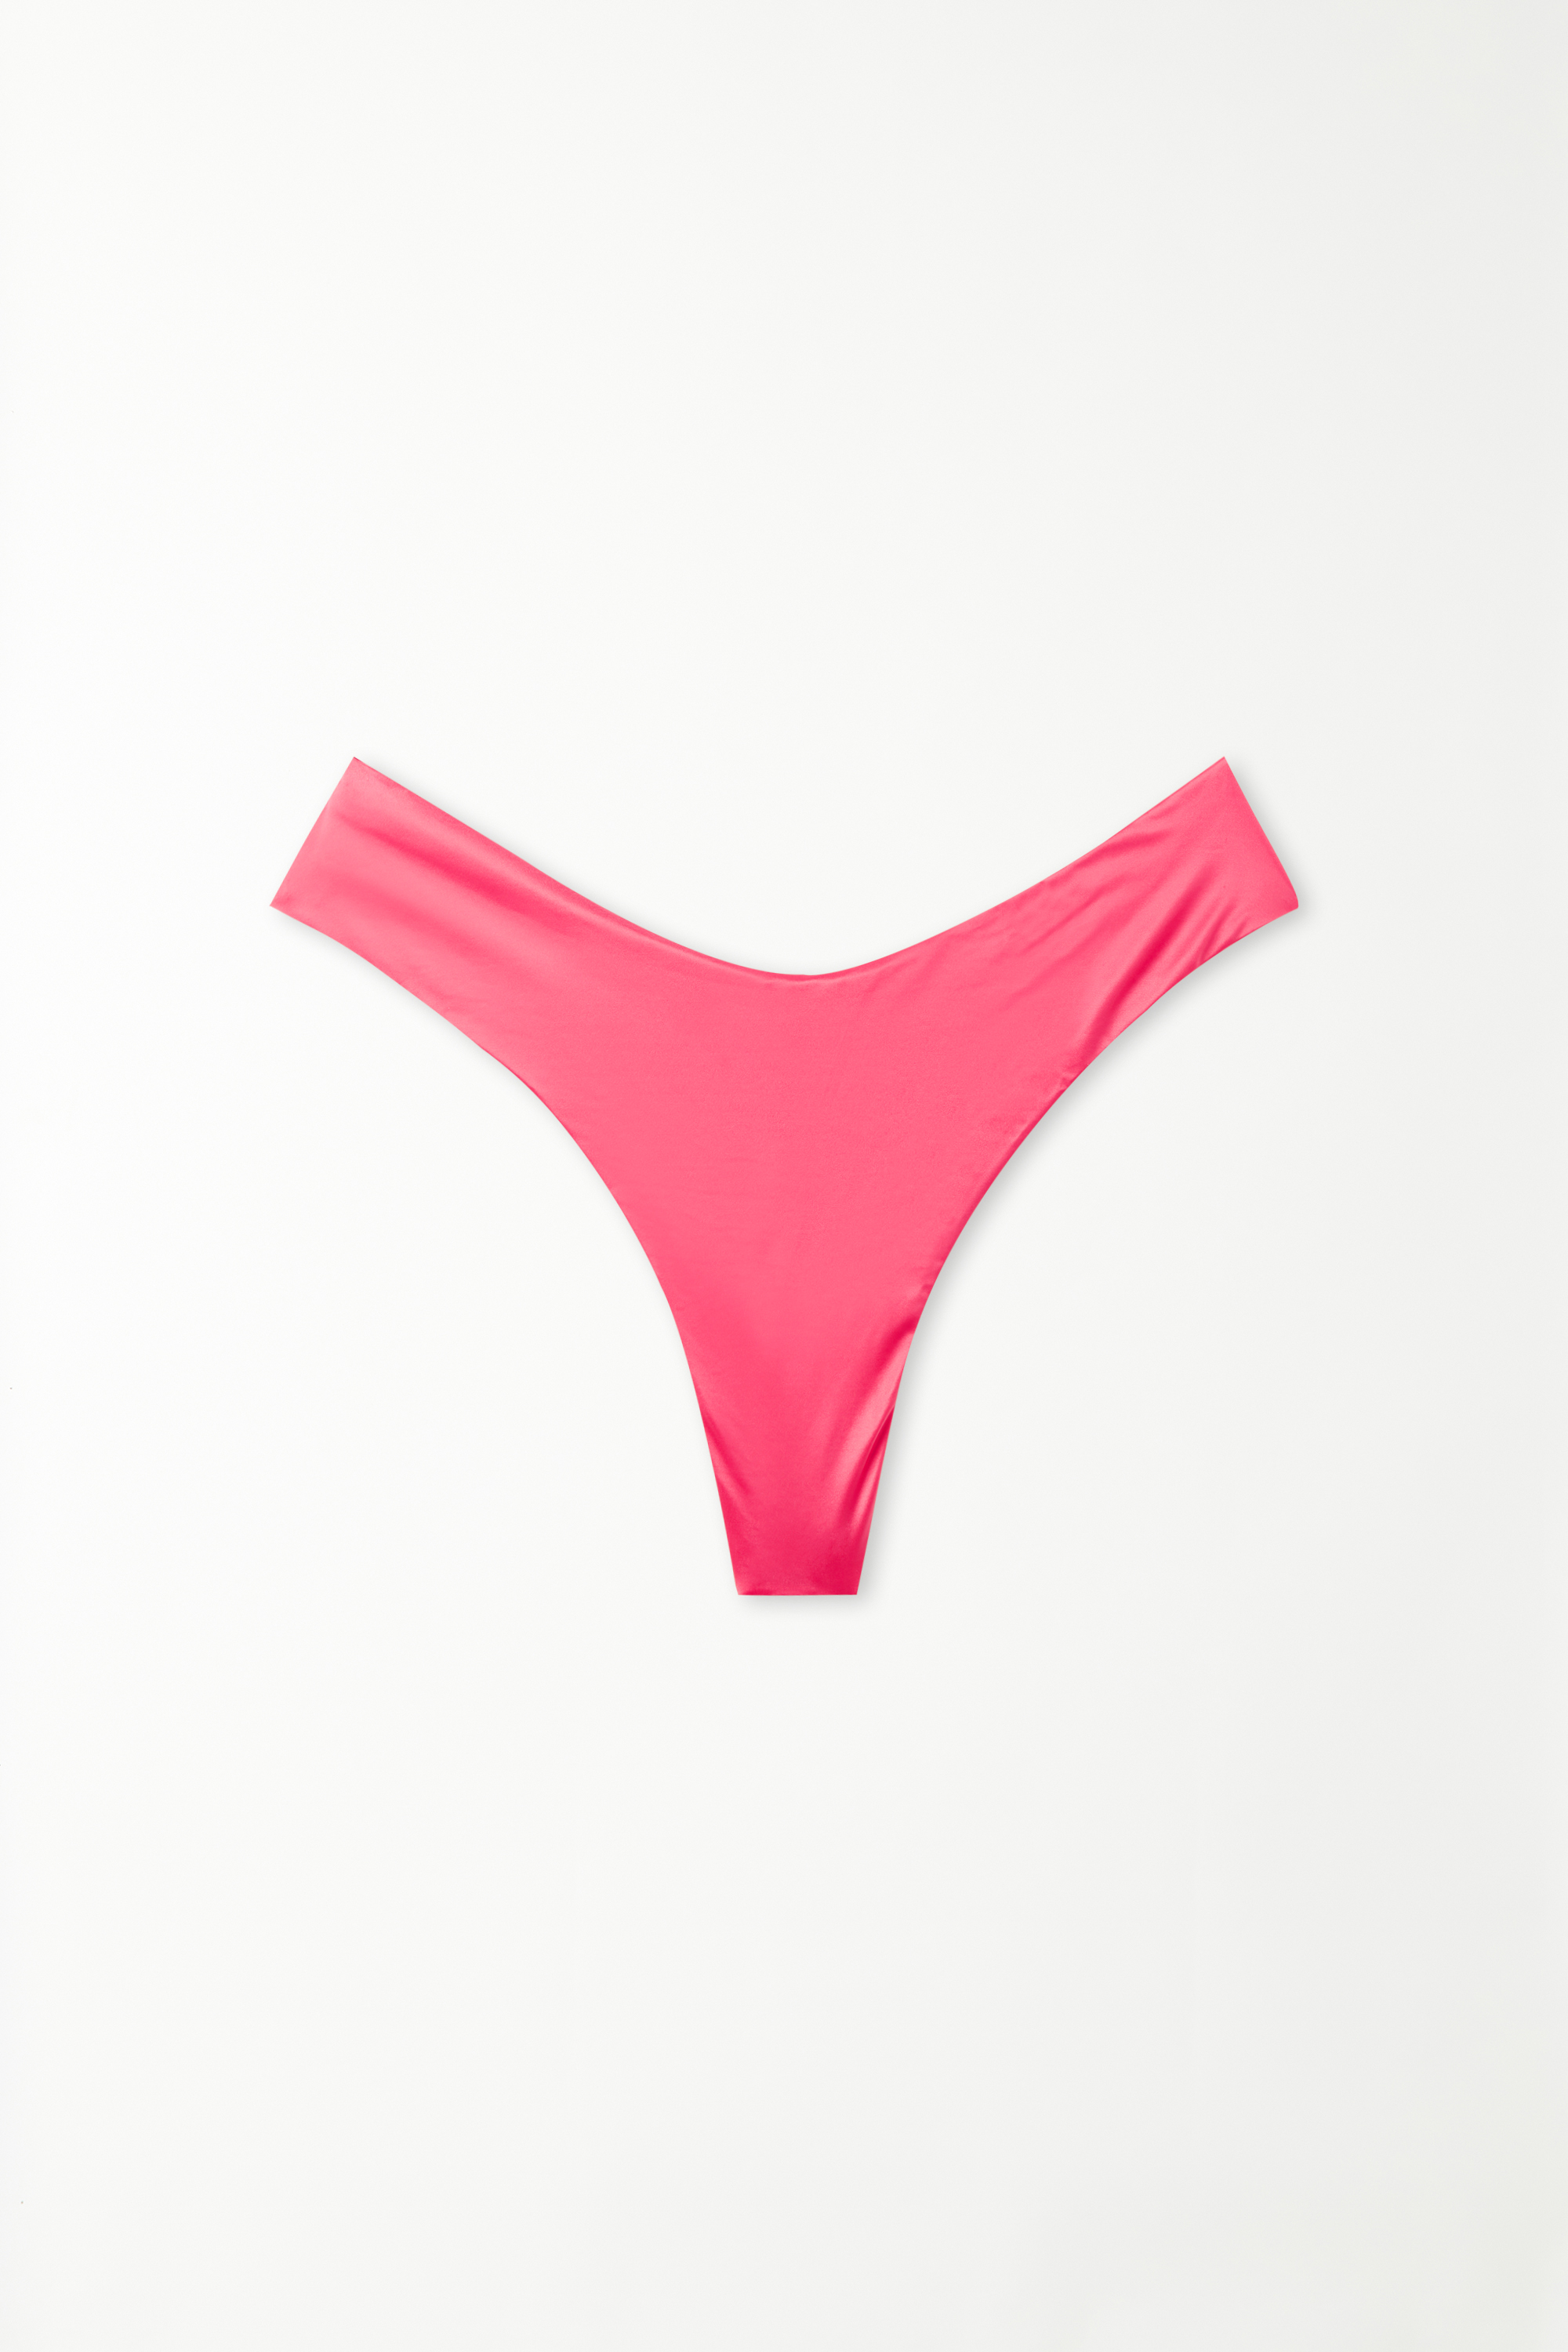 Shiny Summer Pink Rounded High-Cut Brazilian Bikini